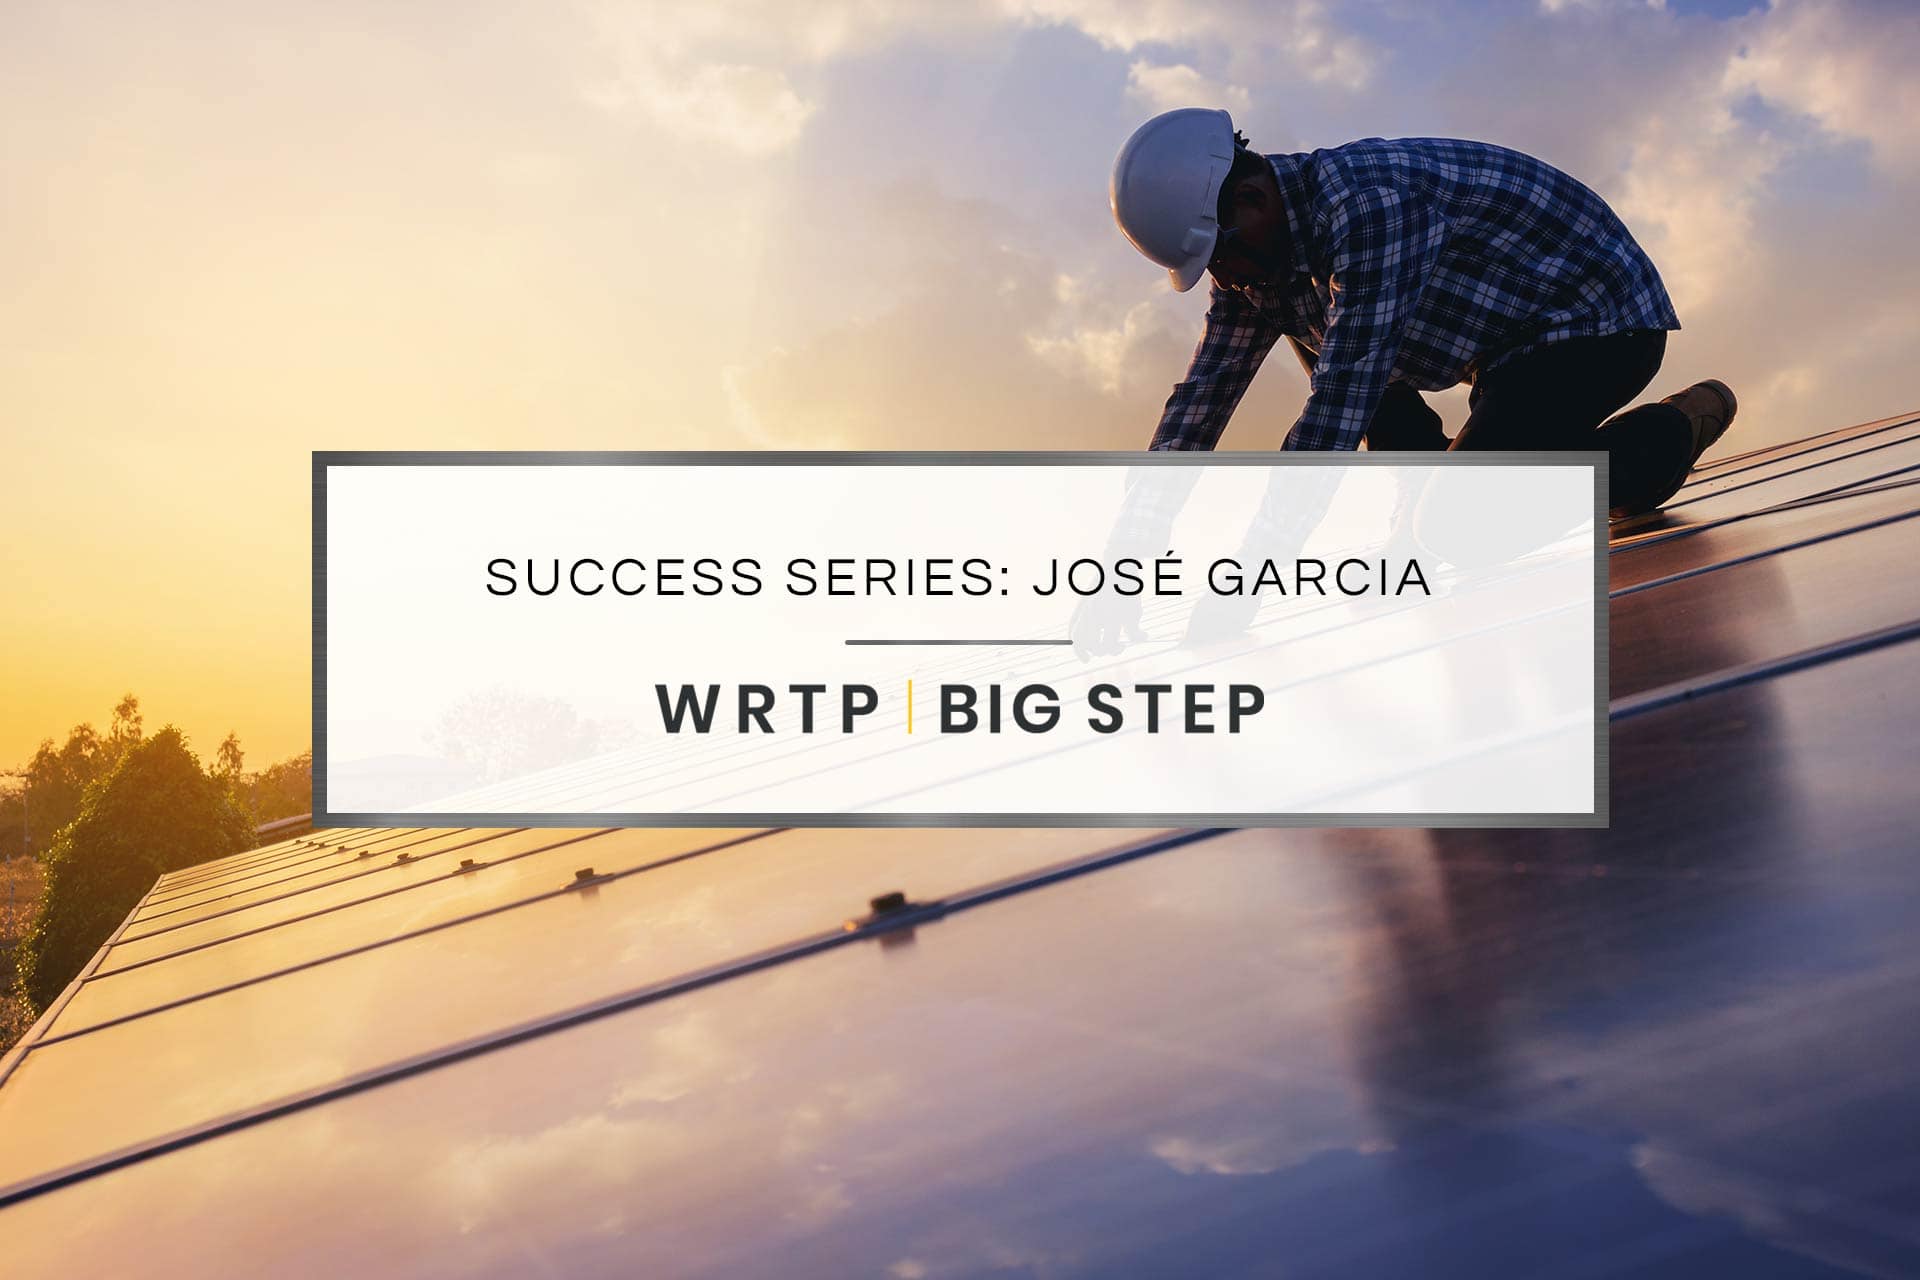 WRTP | BIG STEP Success Series: José Garcia's Success Story